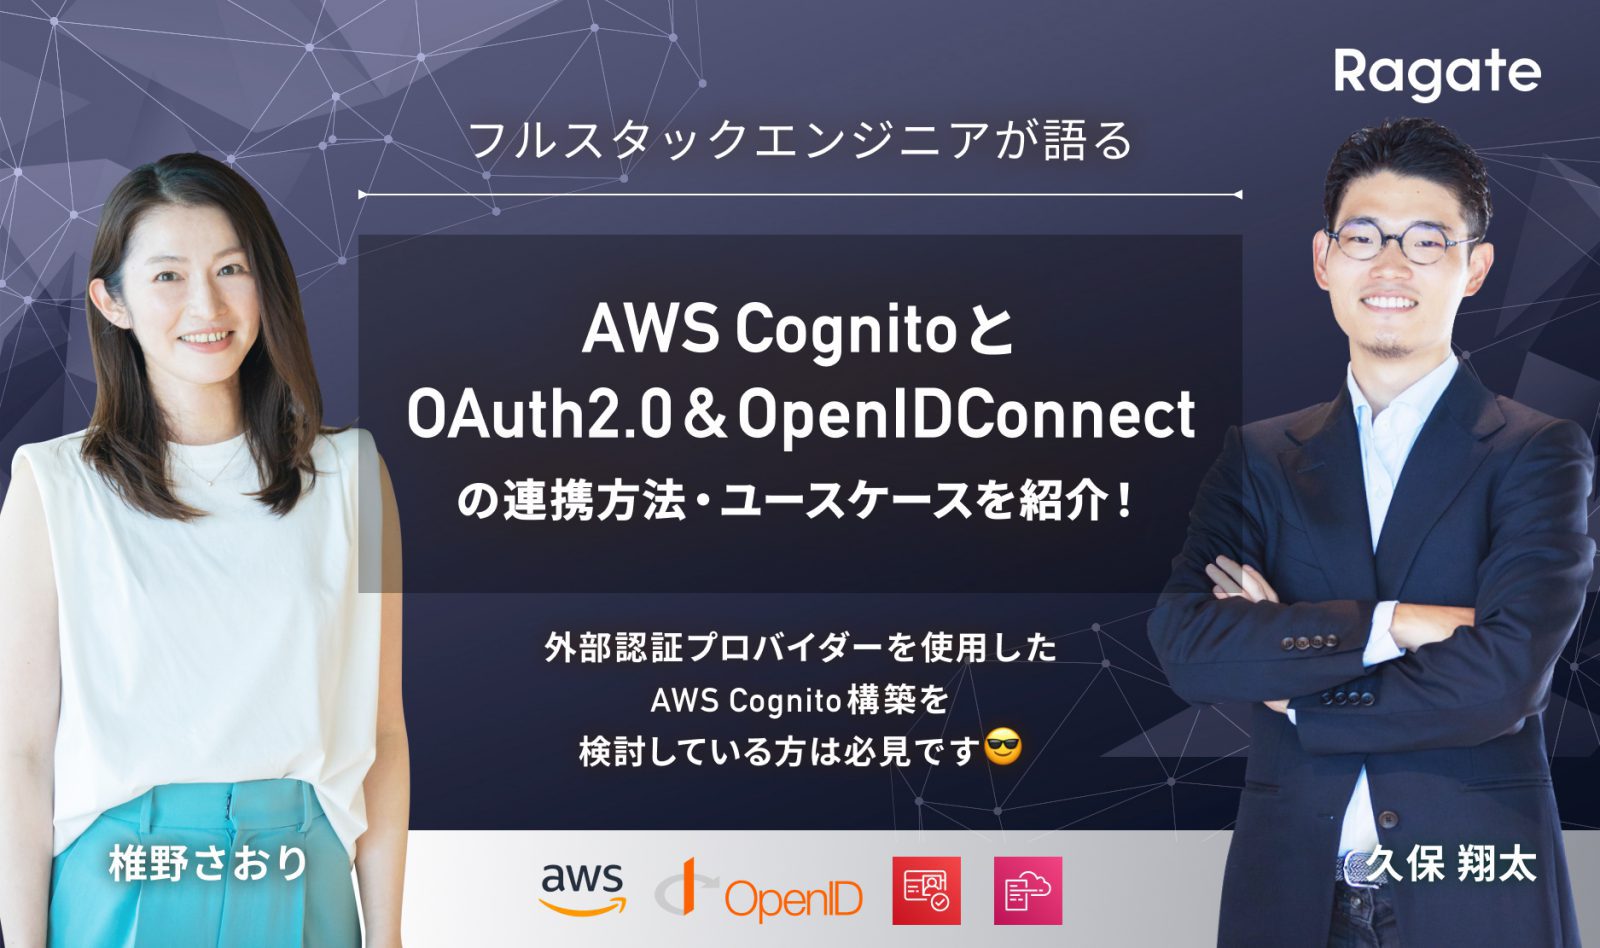 AWS CognitoとOAuth2.0/OpenIDConnectの連携方法・ユースケースを紹介！外部認証プロバイダーを使用したAWS Cognito構築を検討している方は必見です😎